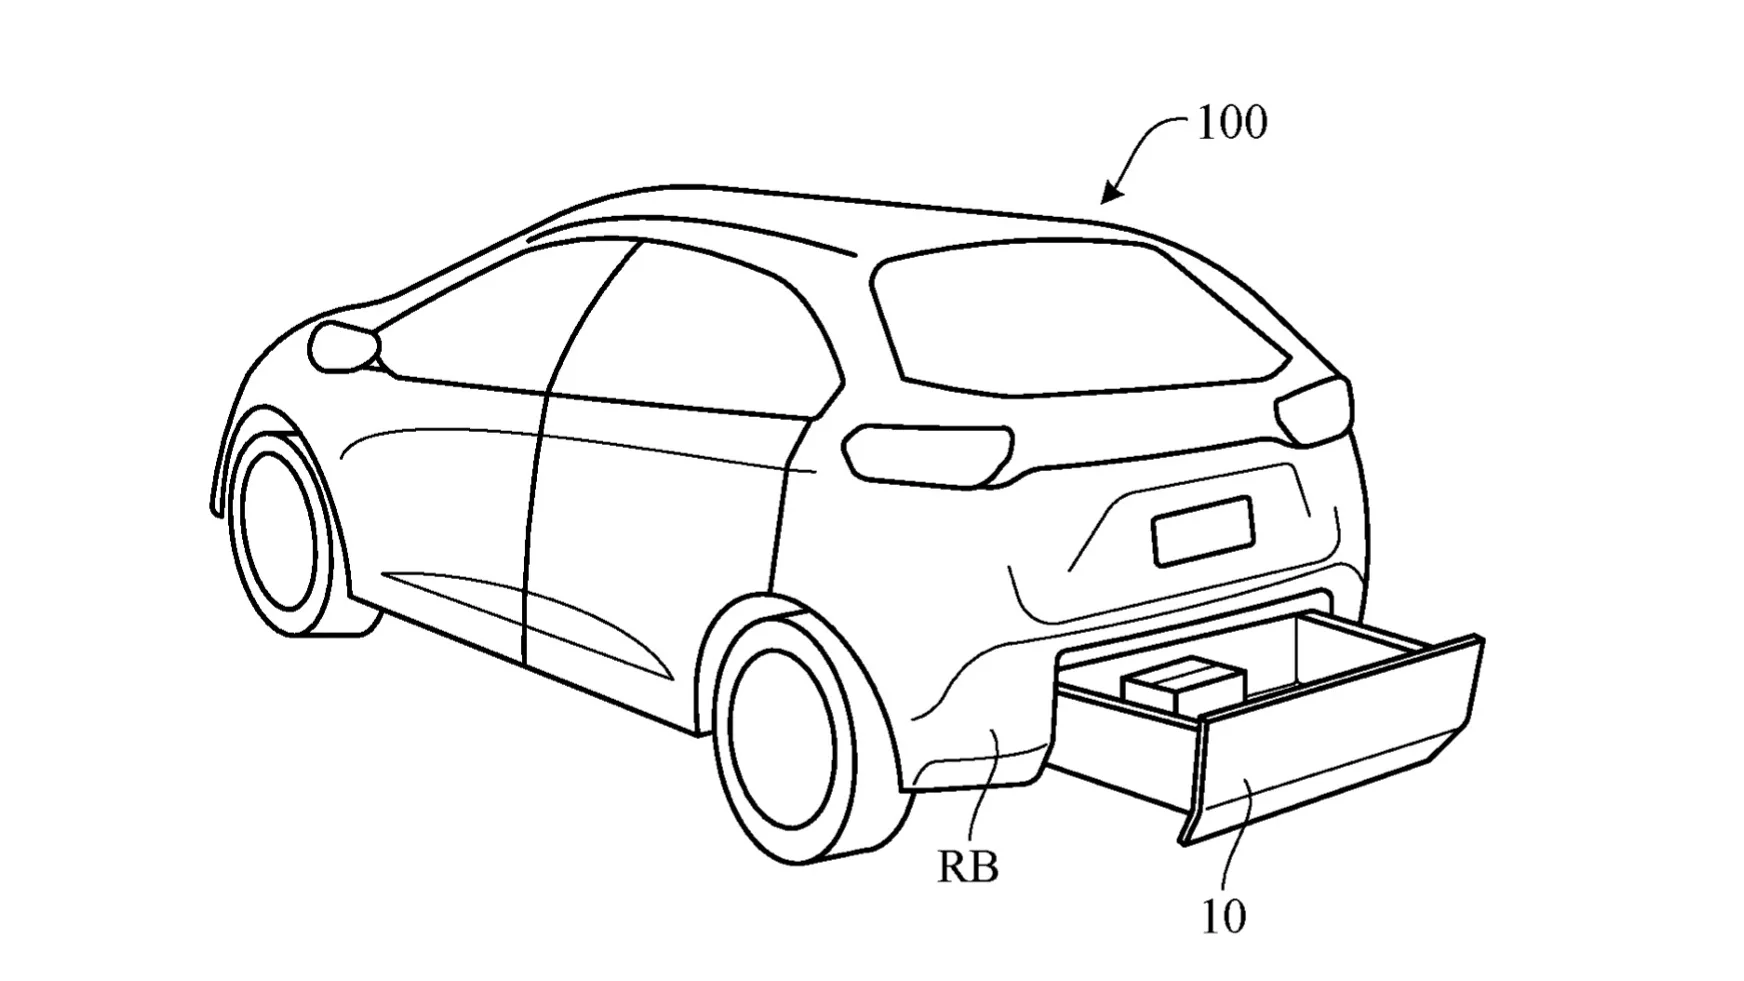 [Honda] Les news - Page 4 Honda-rear-bumper-storage-patent-image_100919051_h